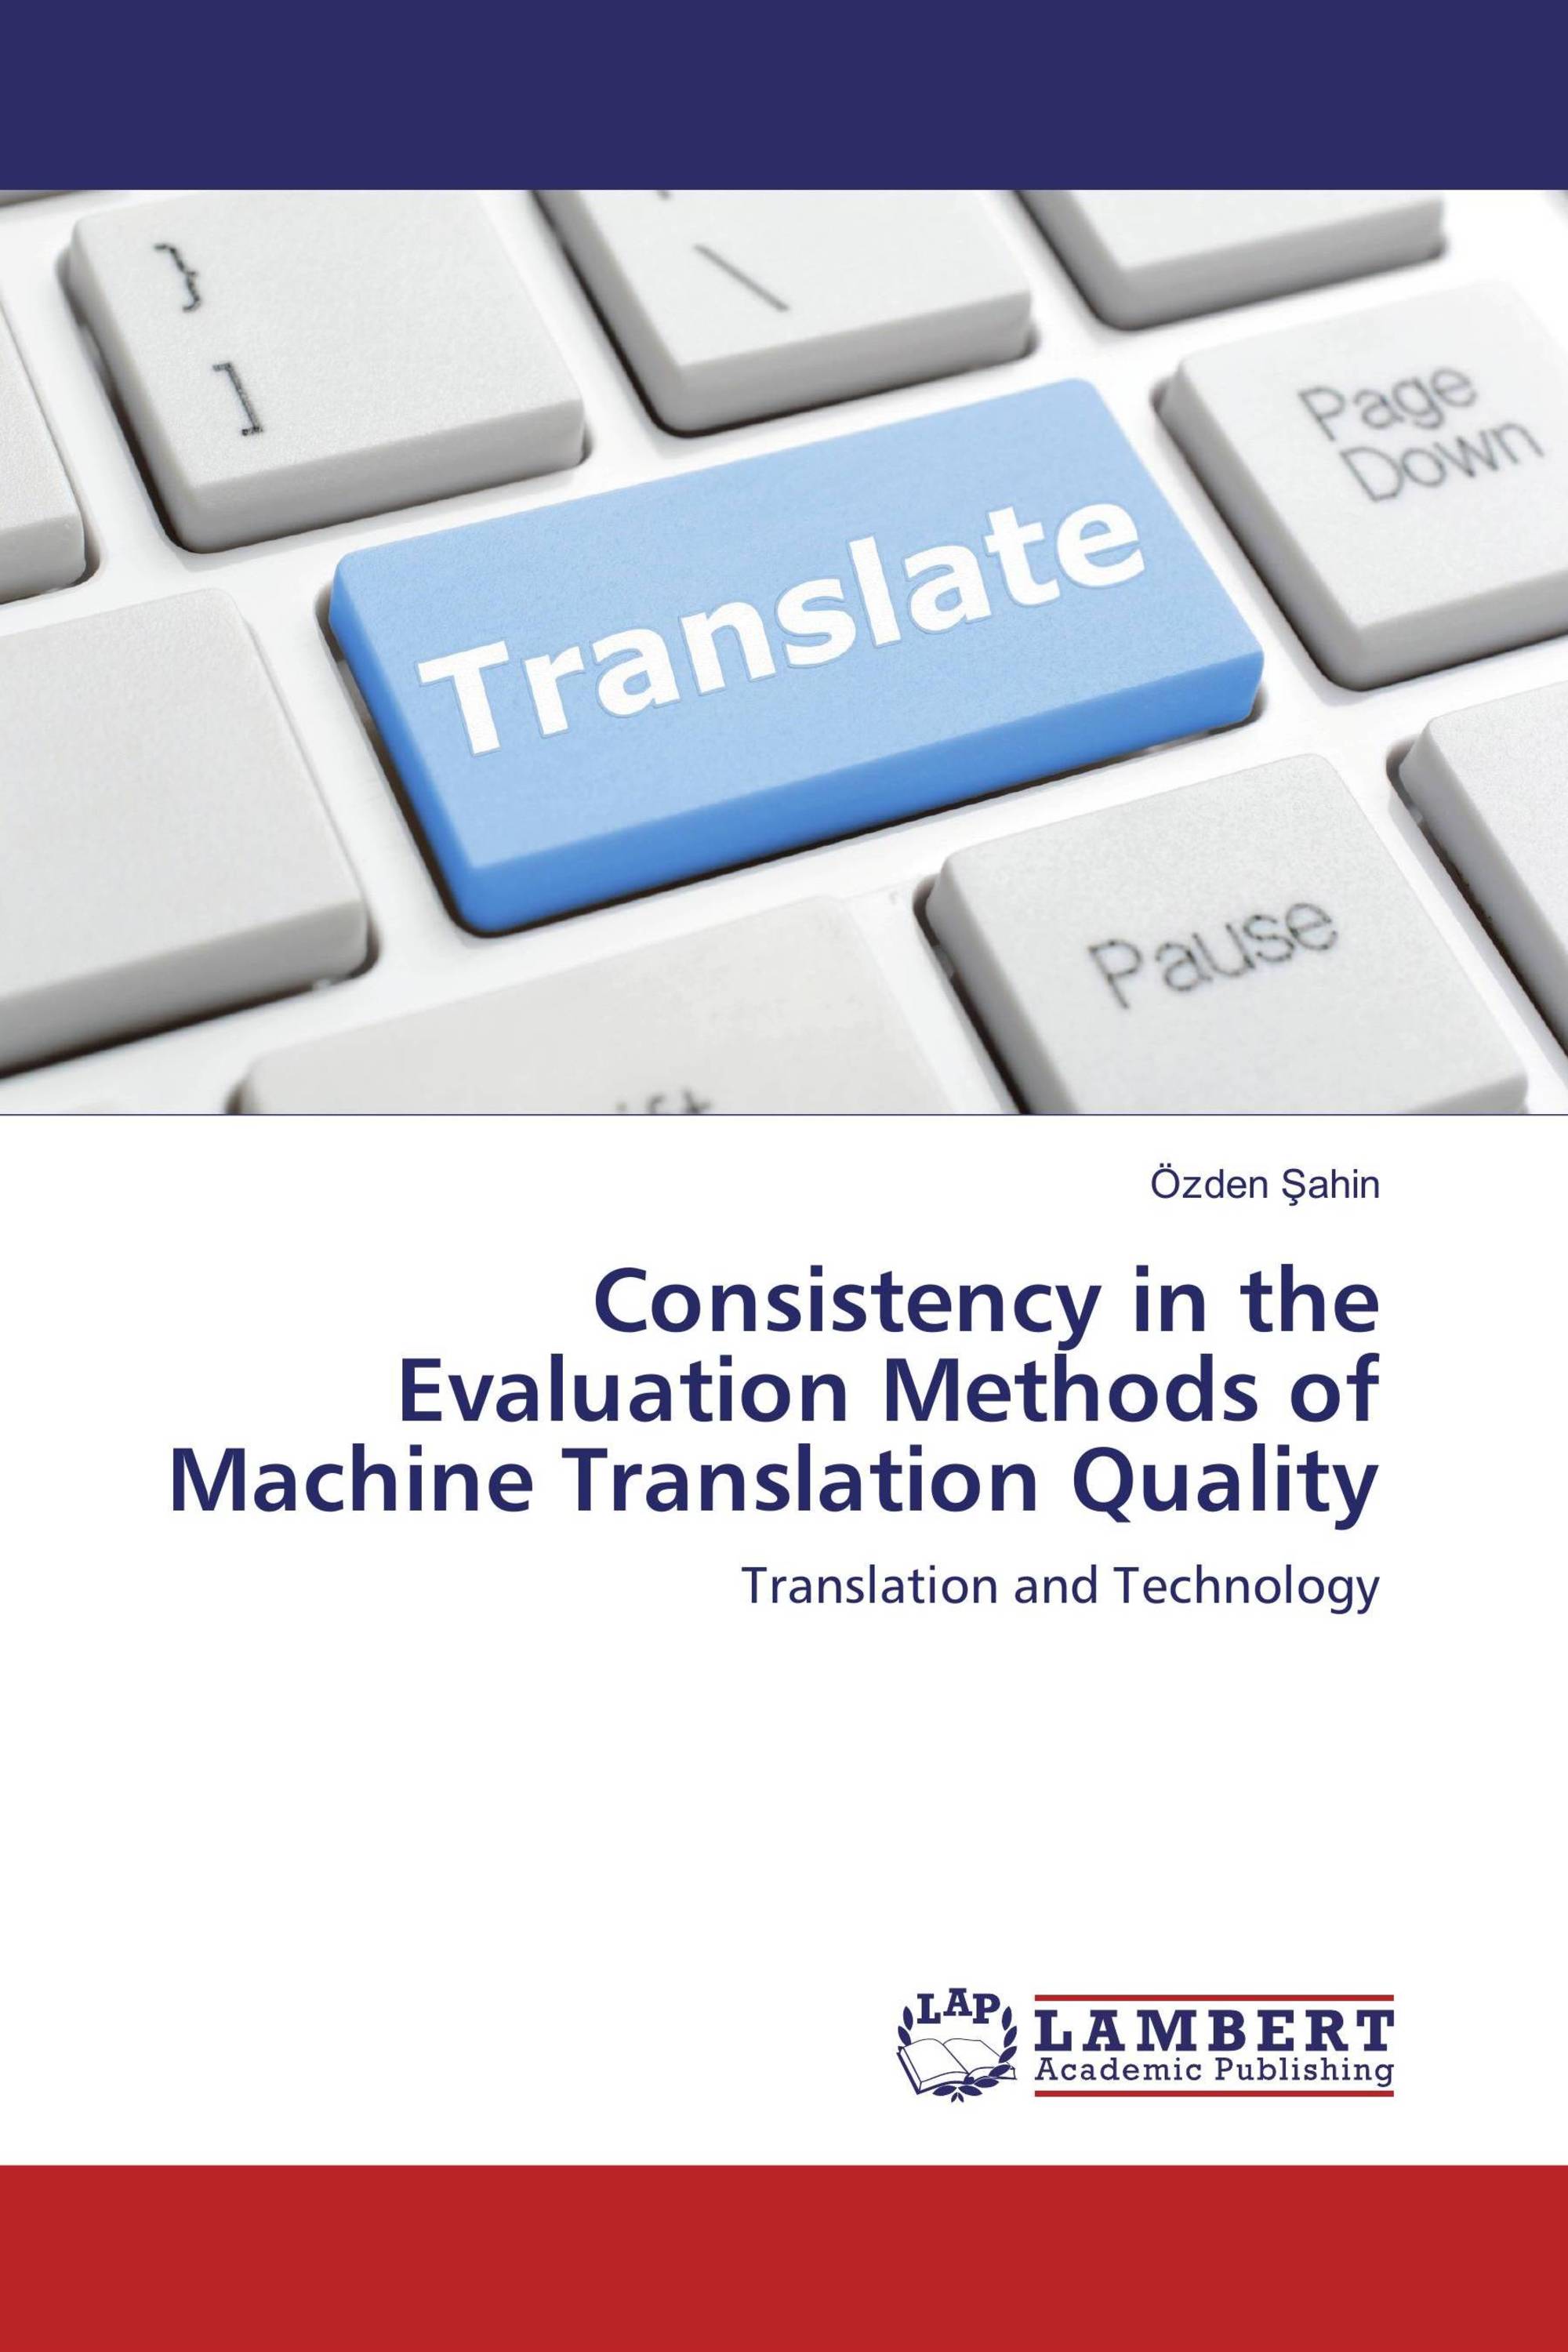 thesis machine translation evaluation